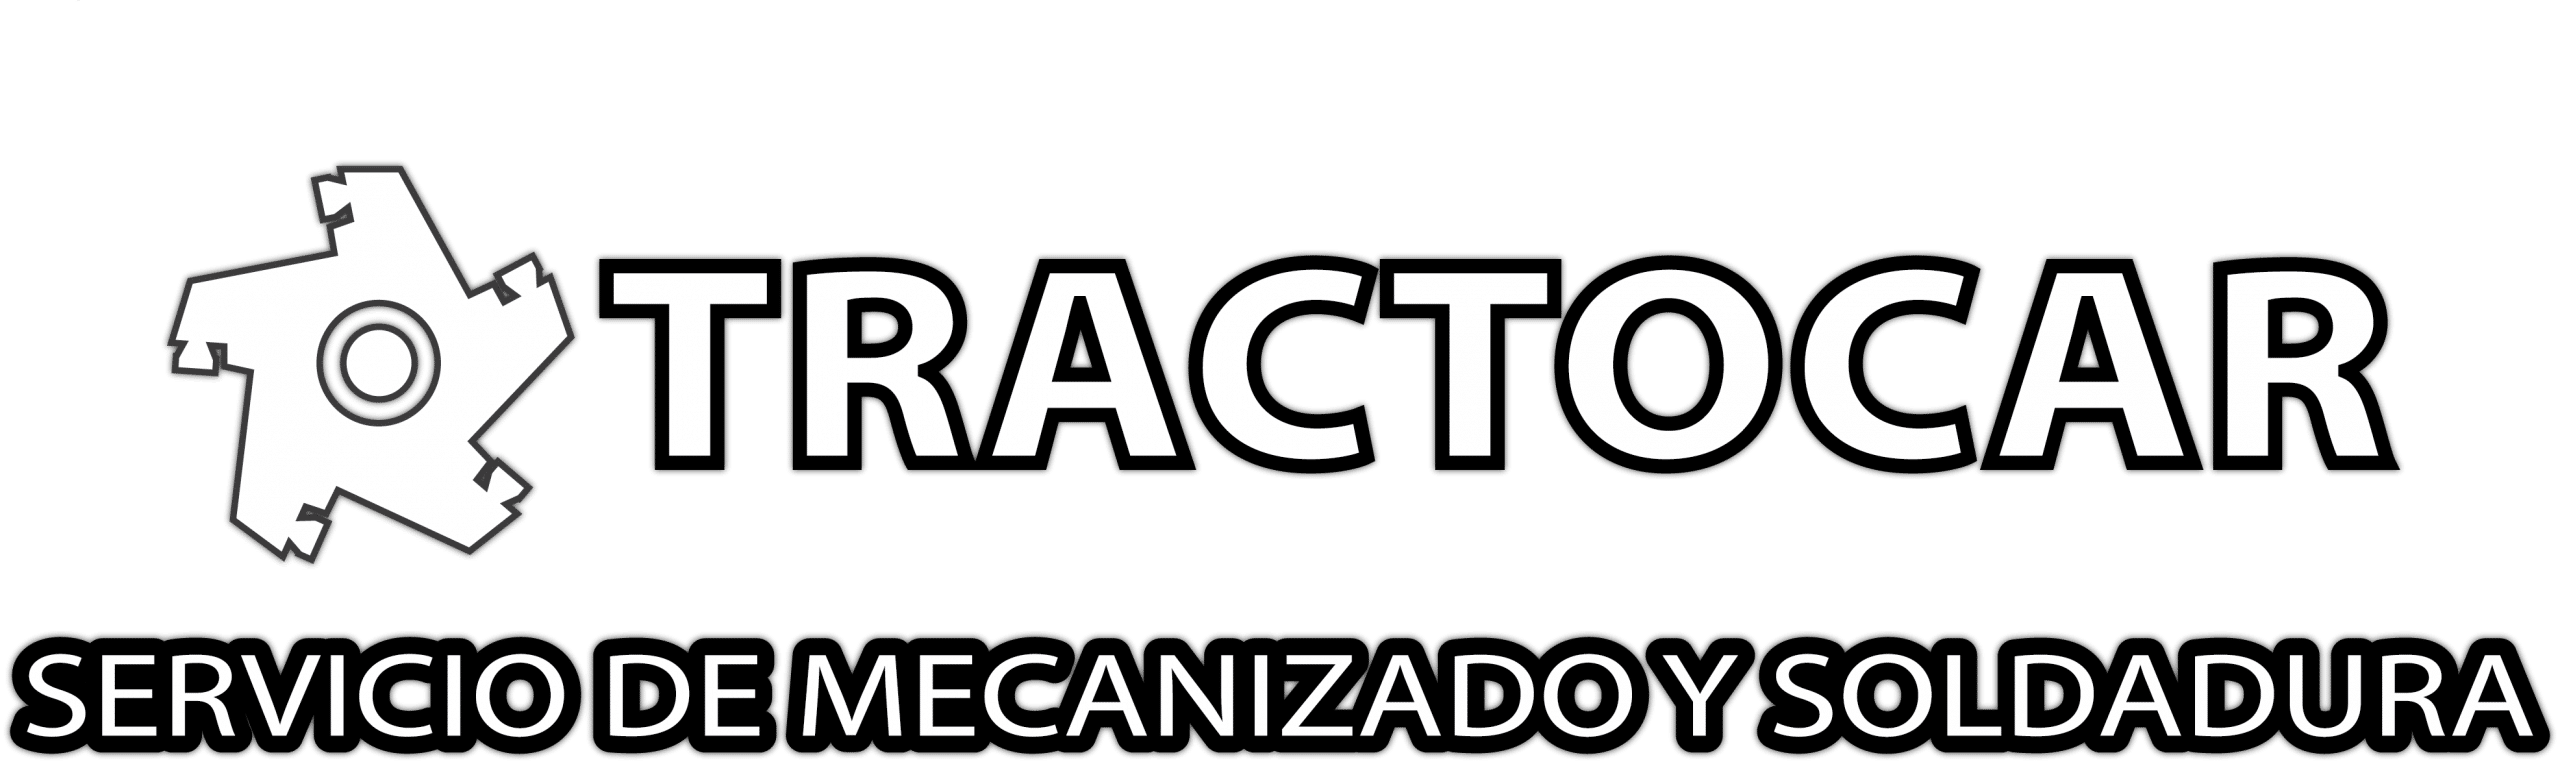 tractocar reparacion carretillas barcelona mecanico toro